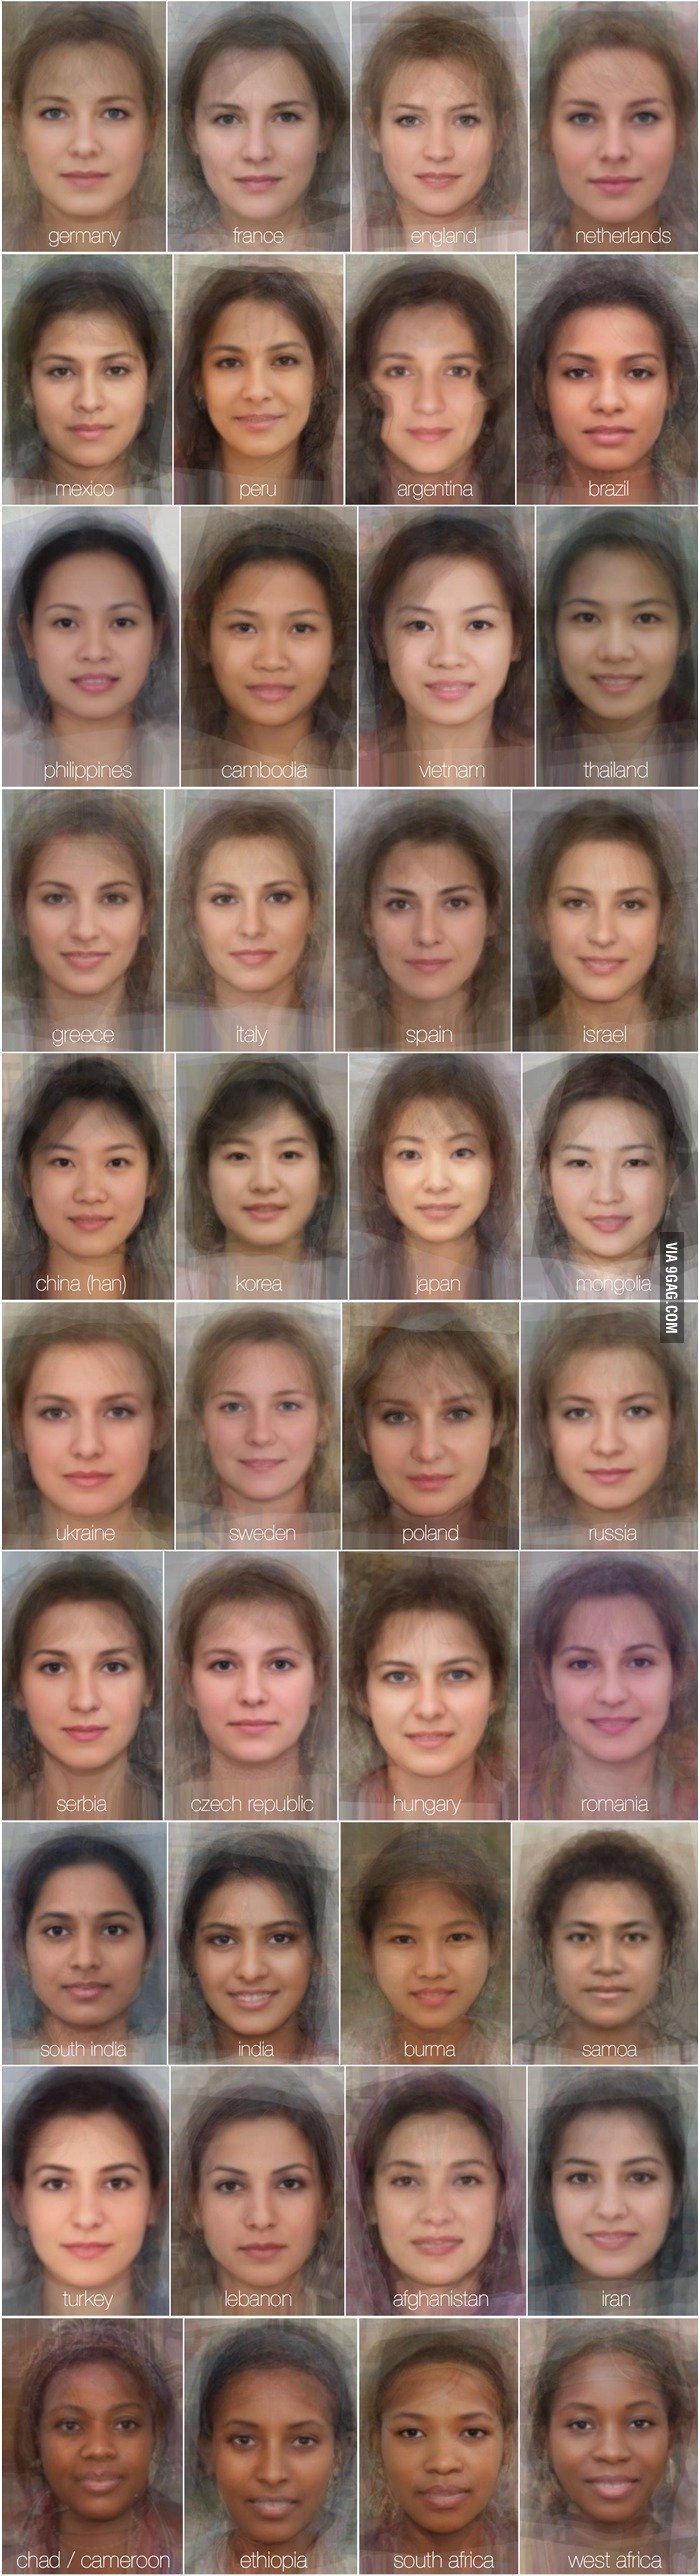 https://petapixel.com/assets/uploads/2011/02/average-faces-of-women-around-the-world.jpg